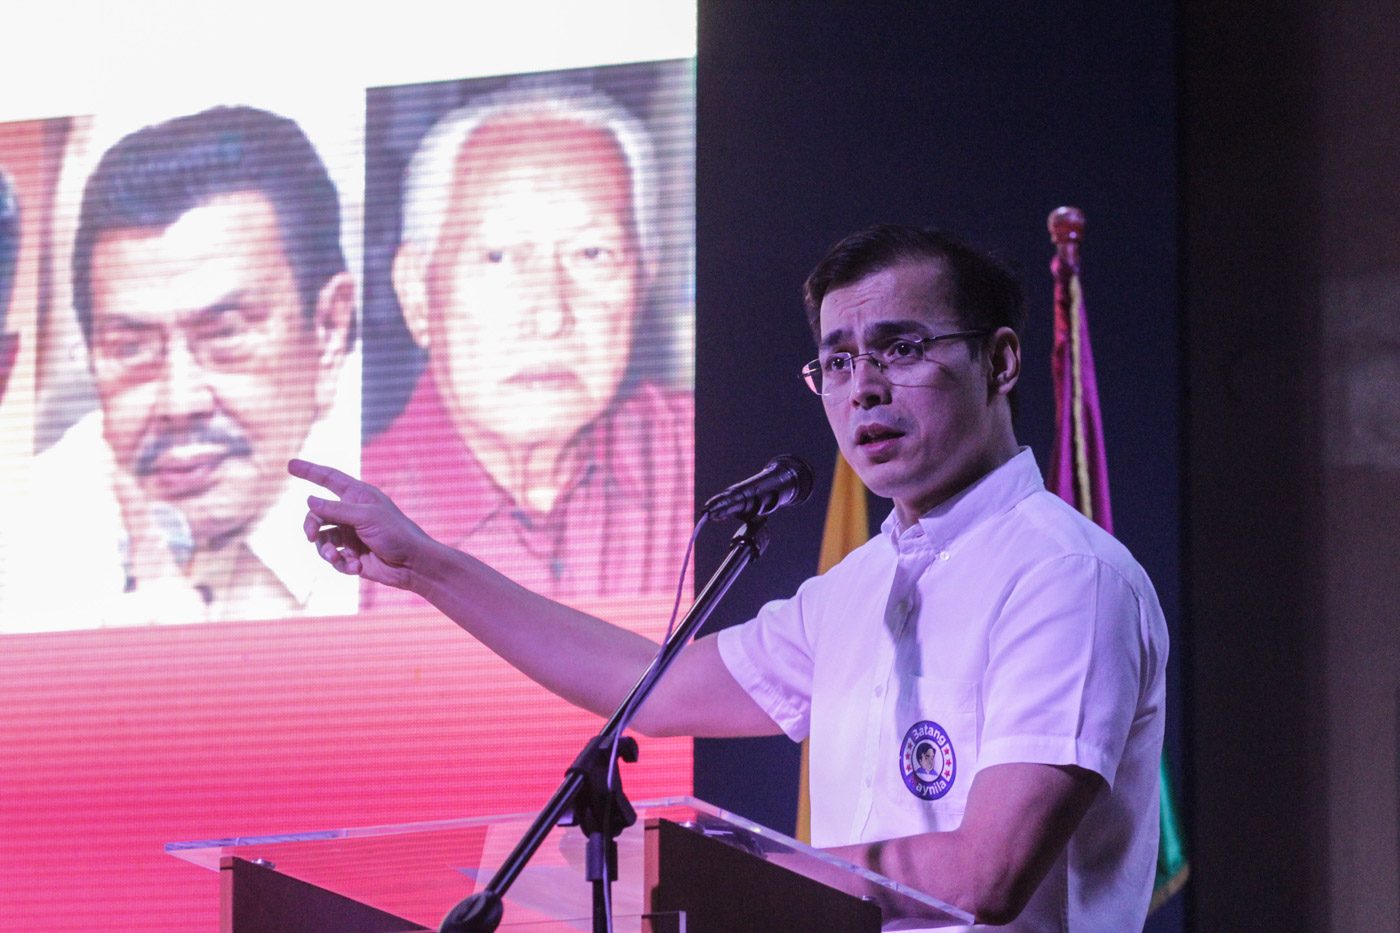 Former ‘basurero’ Isko Moreno vows to clean up filthy Manila